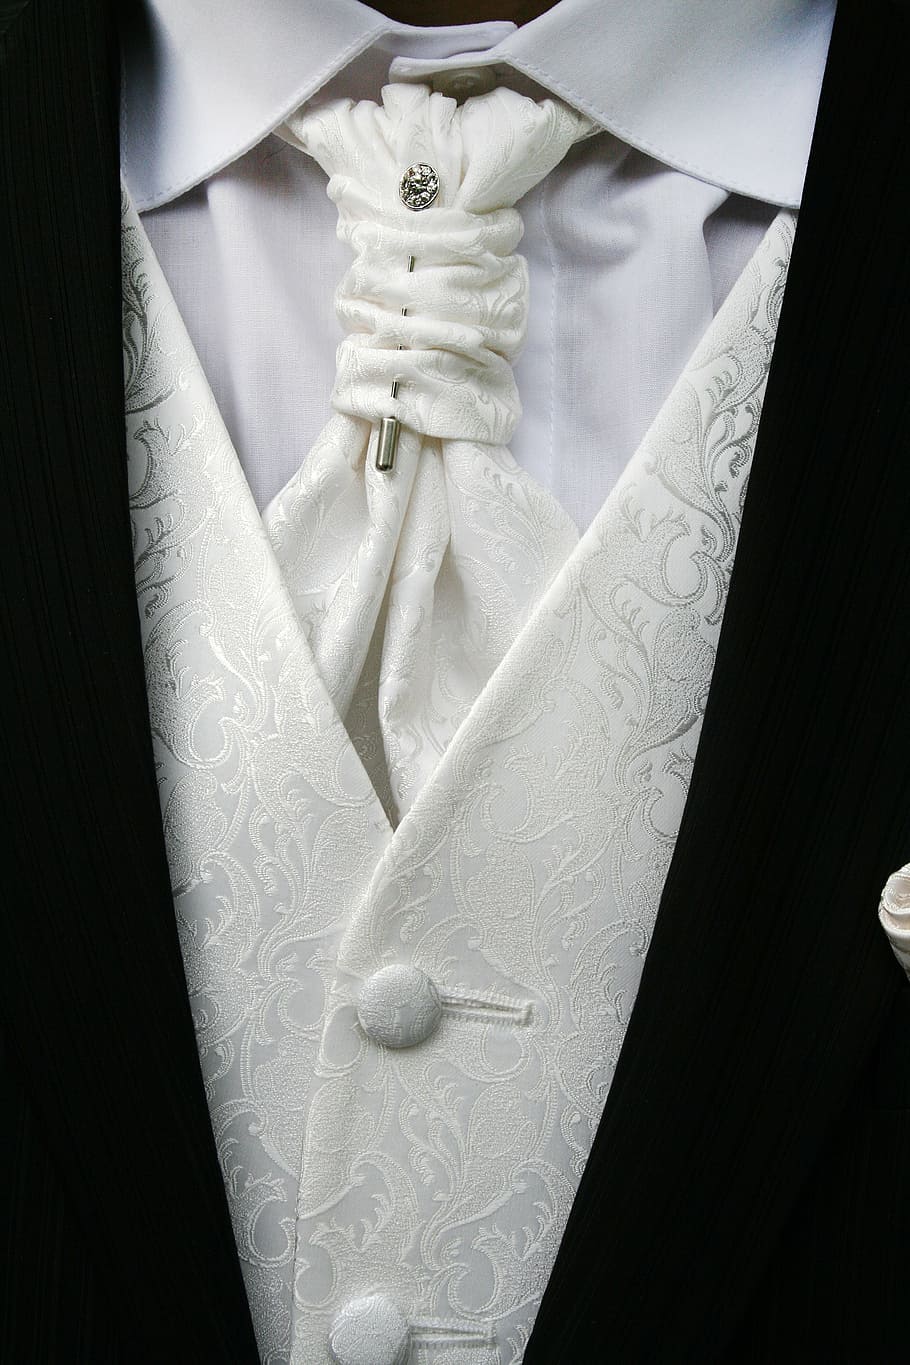 corbata blanca, elegante, traje, corbata, chaleco, orbe, boda, esposo, vestido, exclusivo